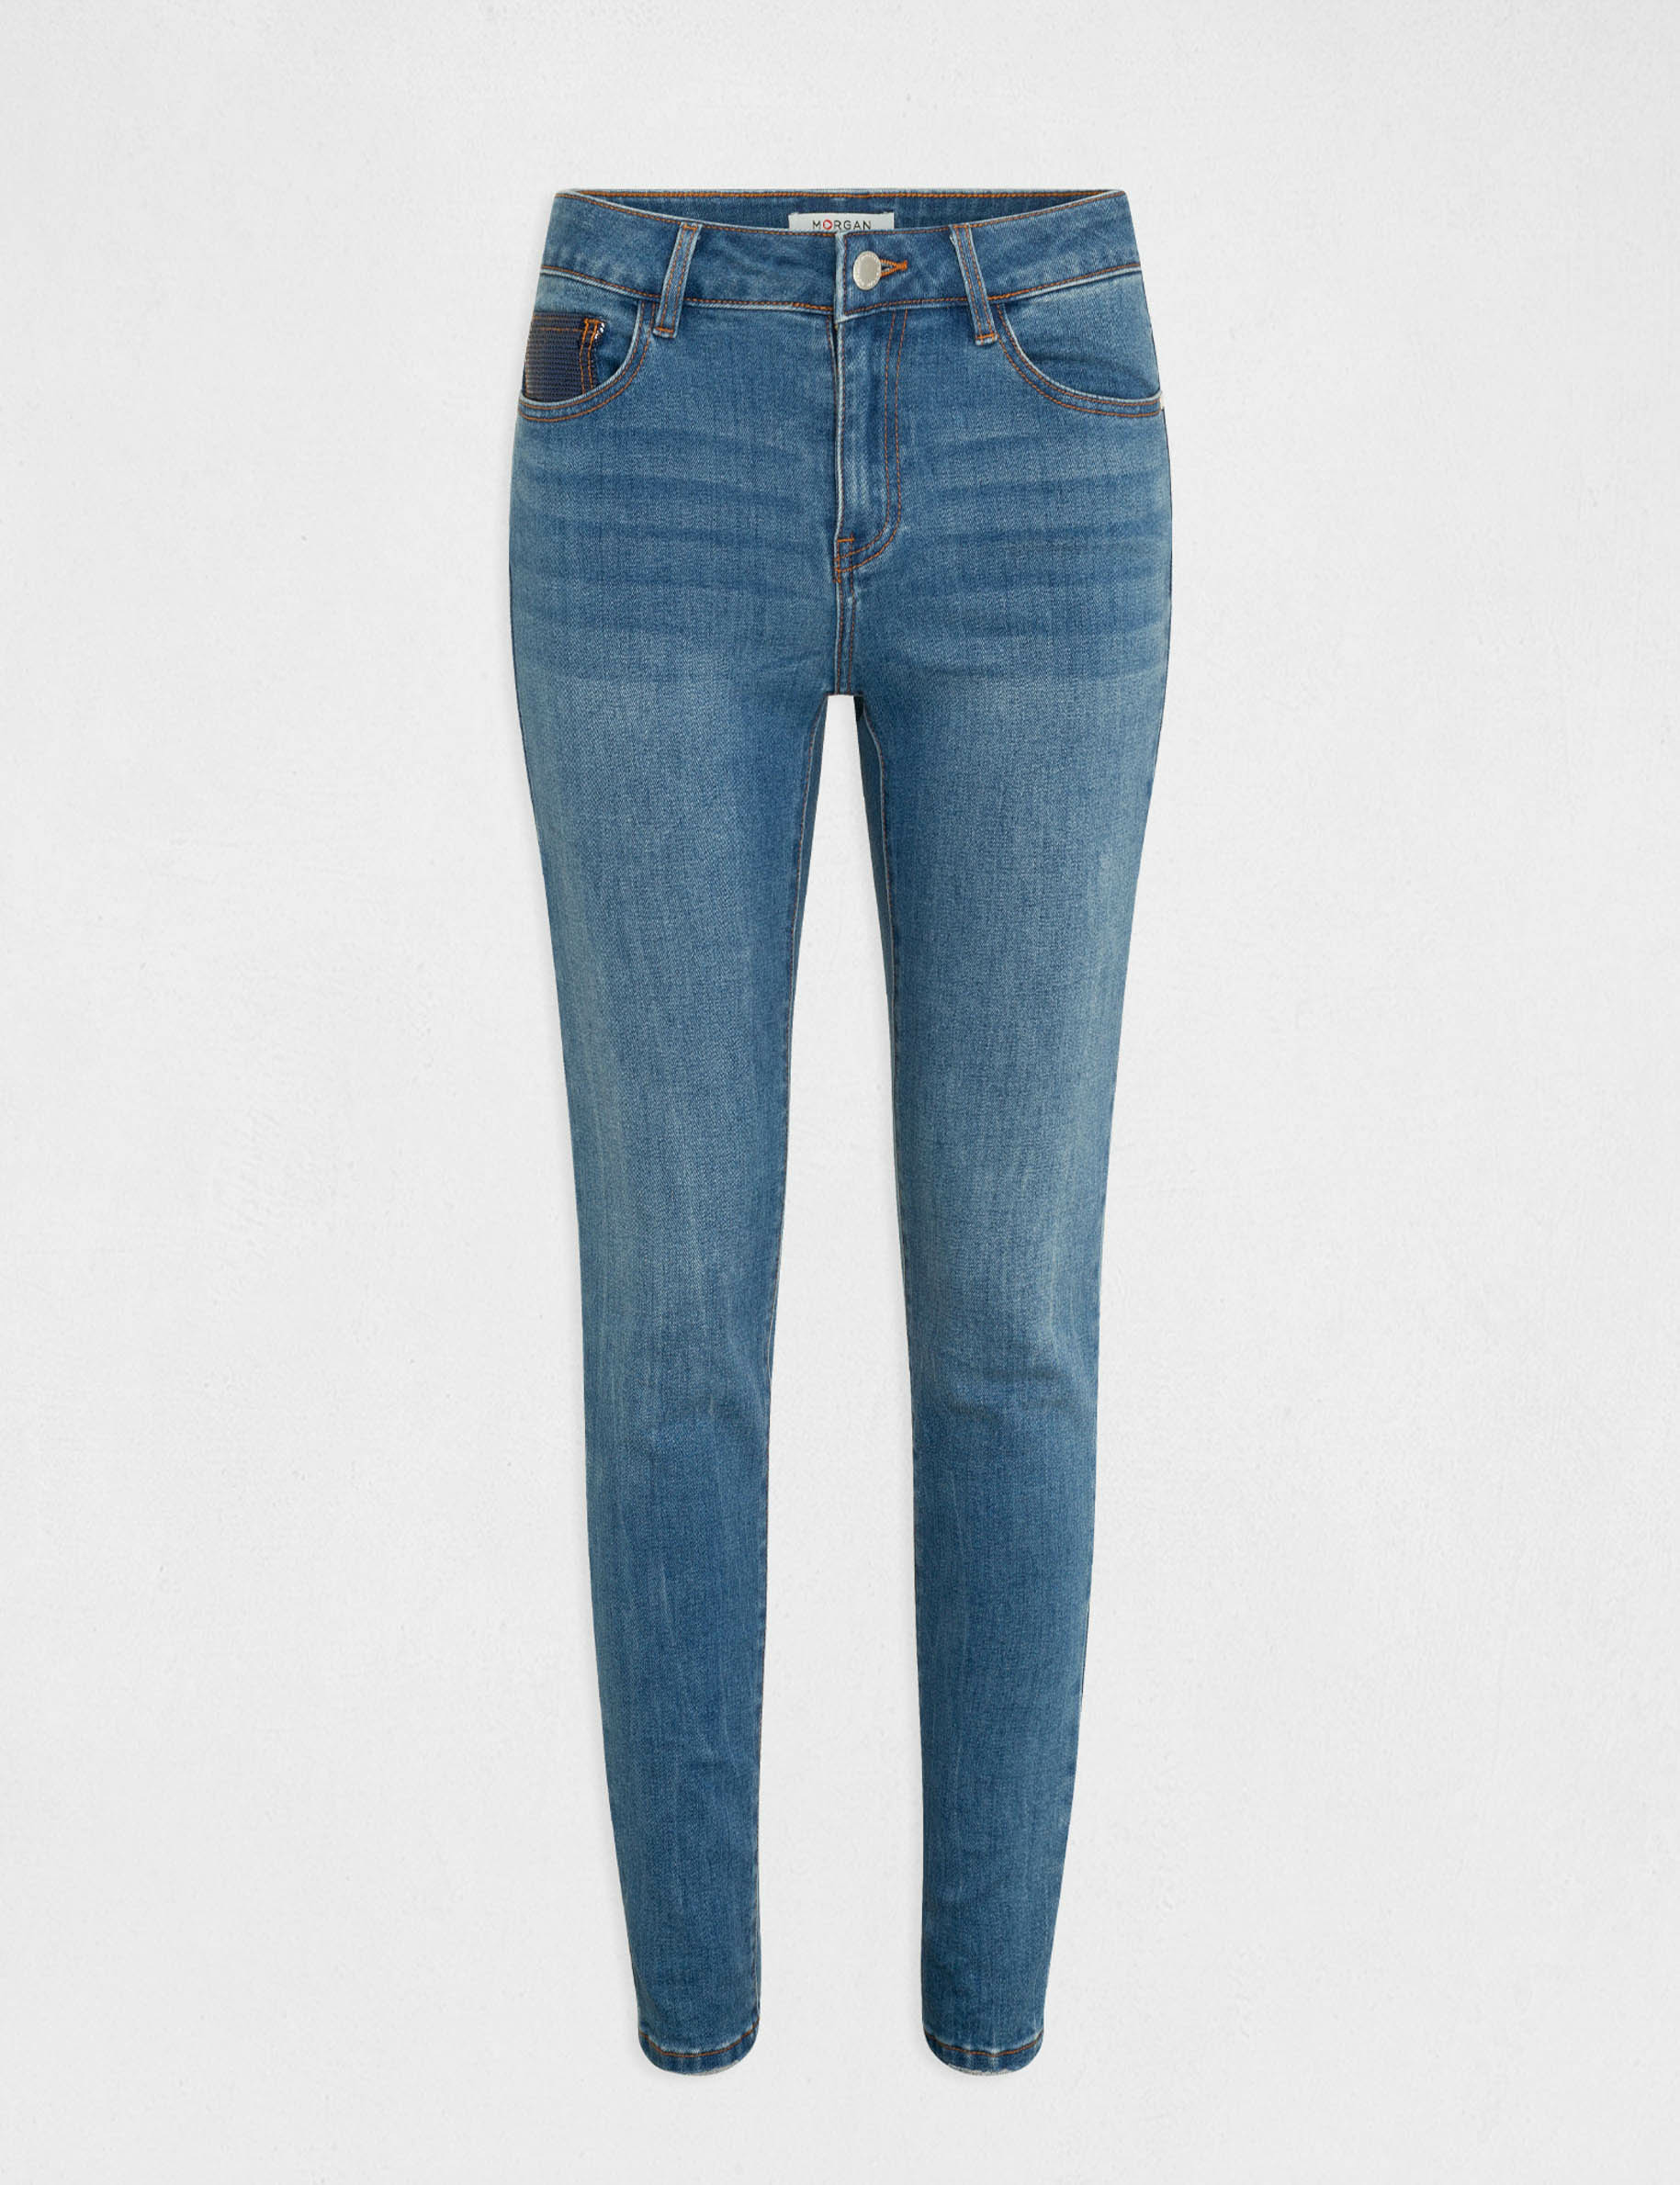 Skinny jeans with sequins details stone denim ladies'